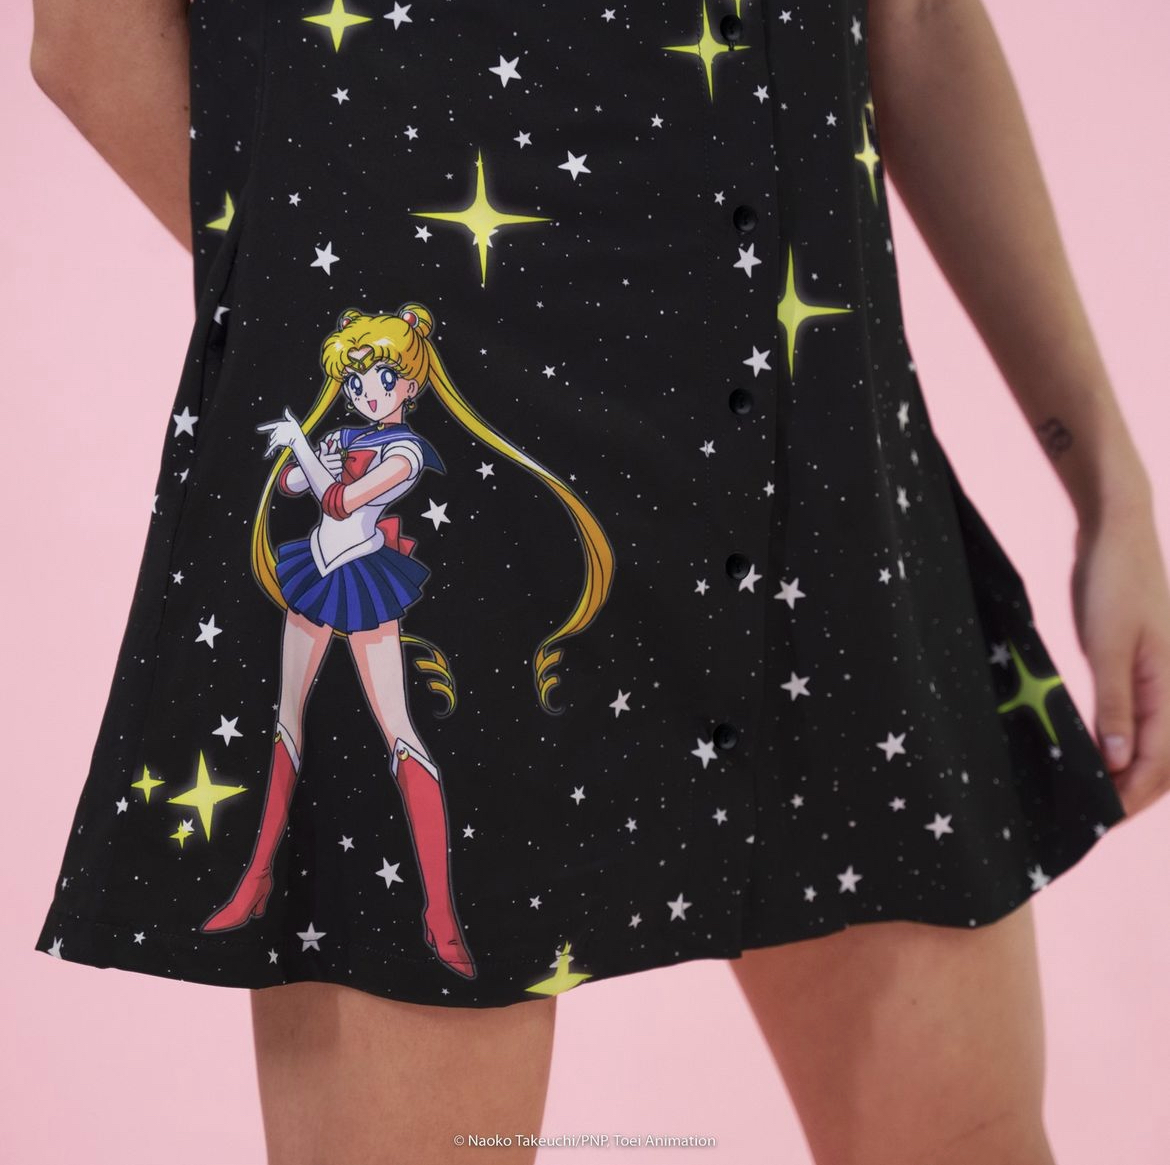 BlackMilk x Sailor Moon collaboration